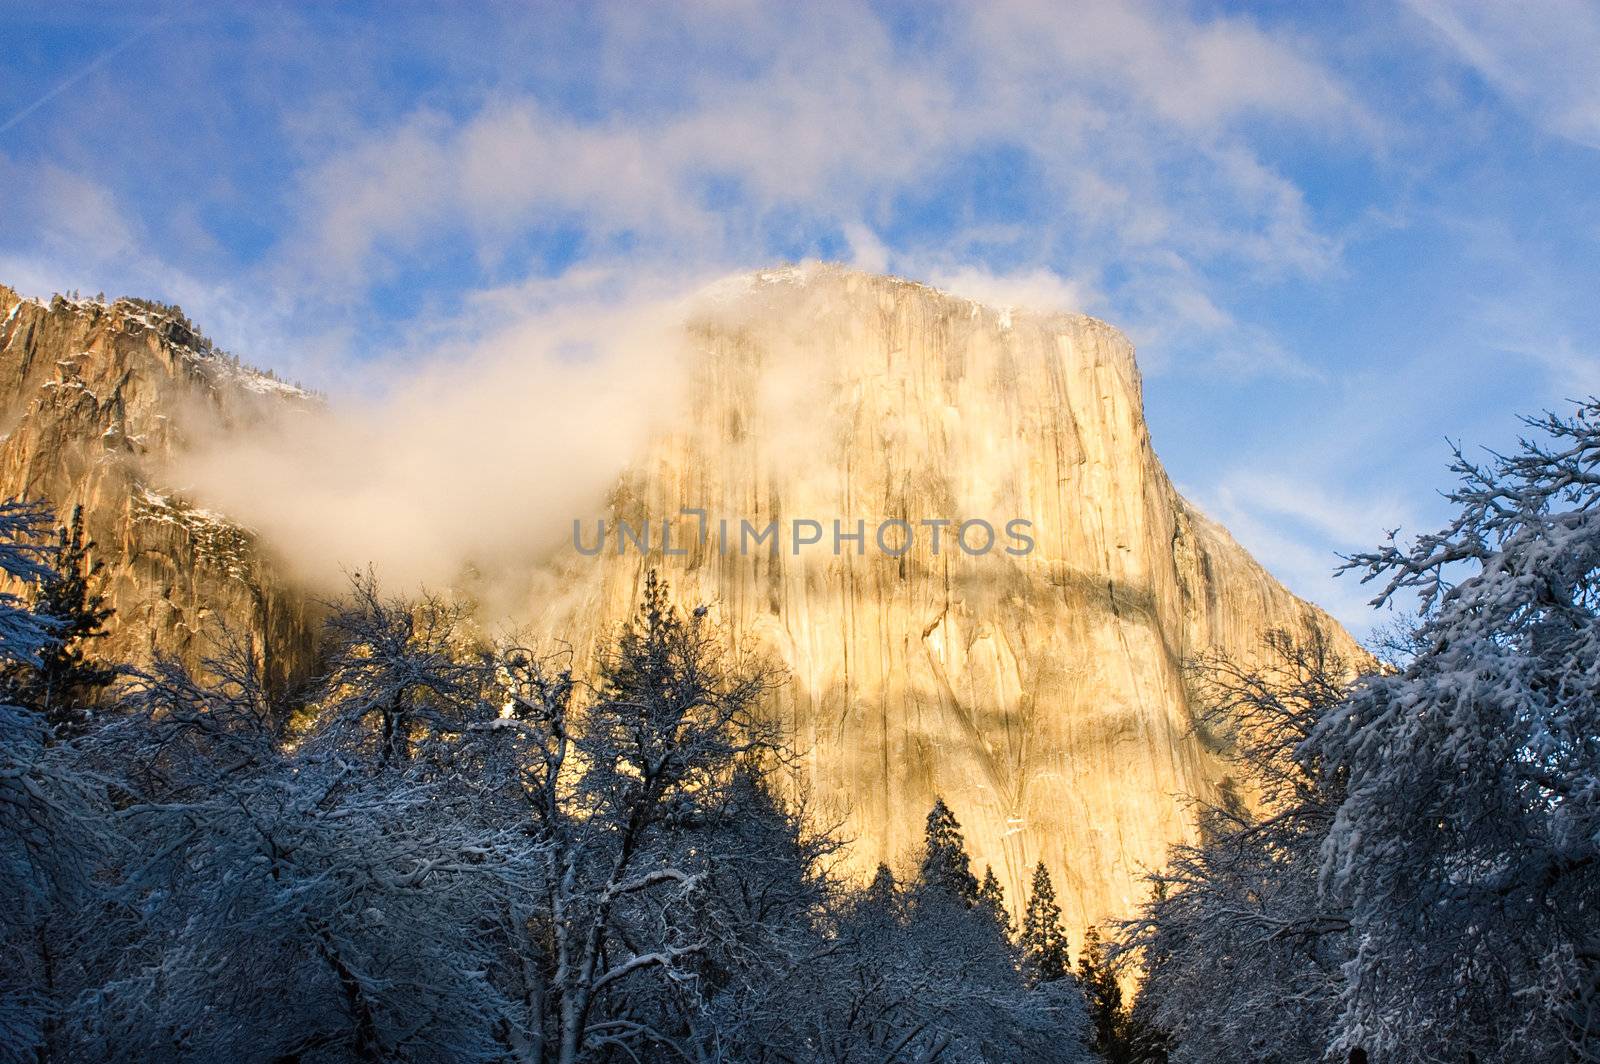 El Capitan in Yosemite valley during the winter in California